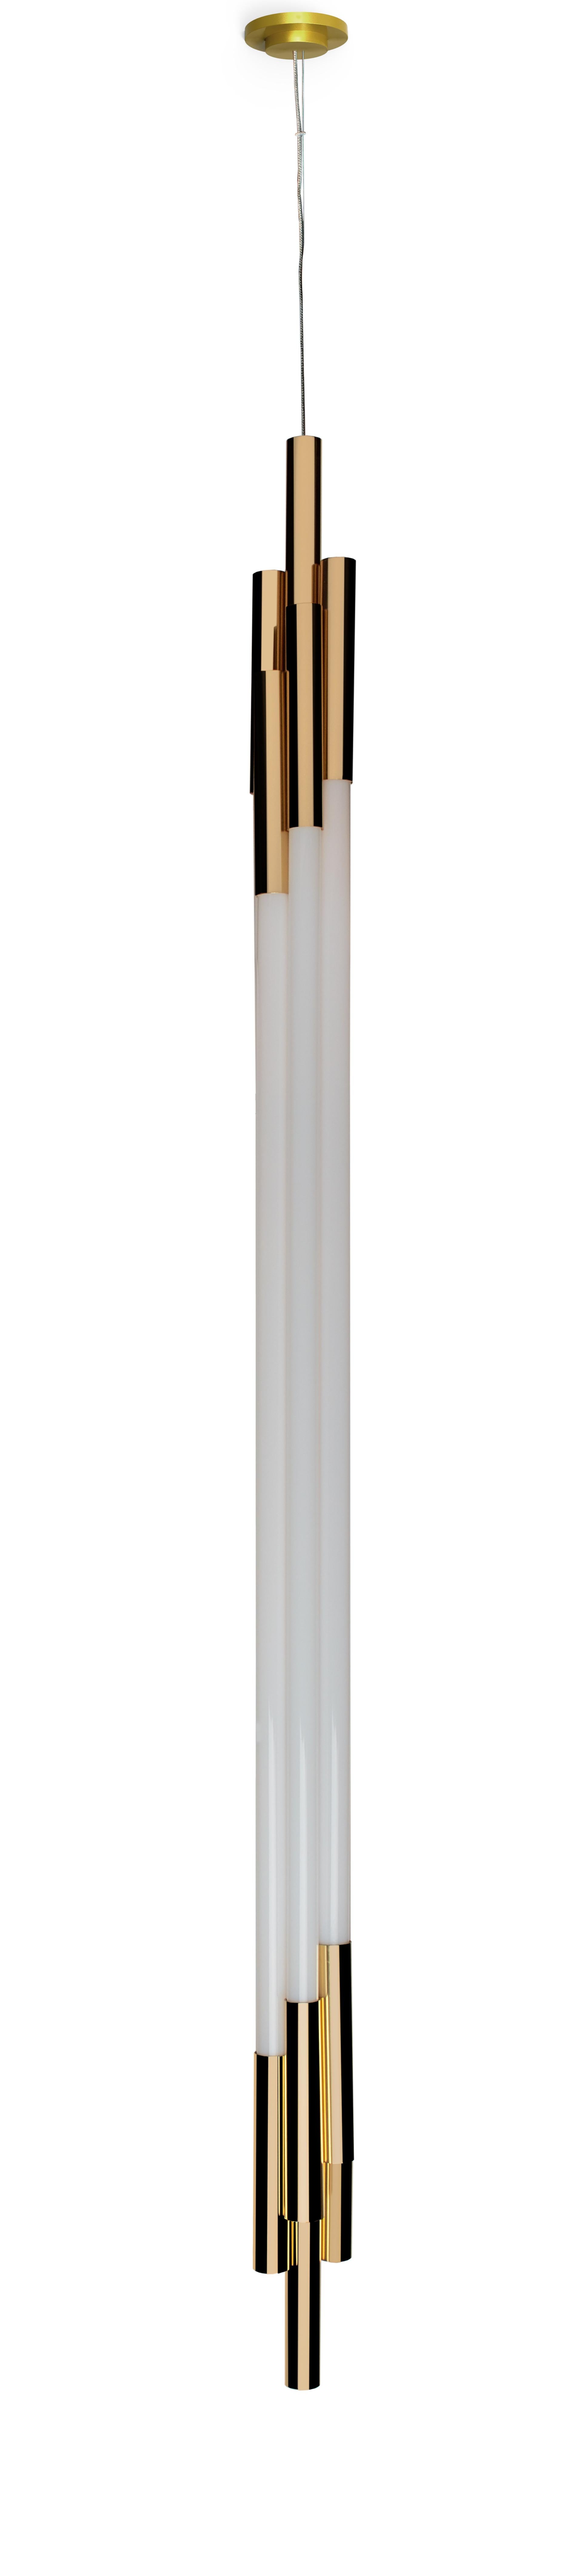 Post-Modern Small Vertical Org Pendant Lamp by Sebastian Summa For Sale